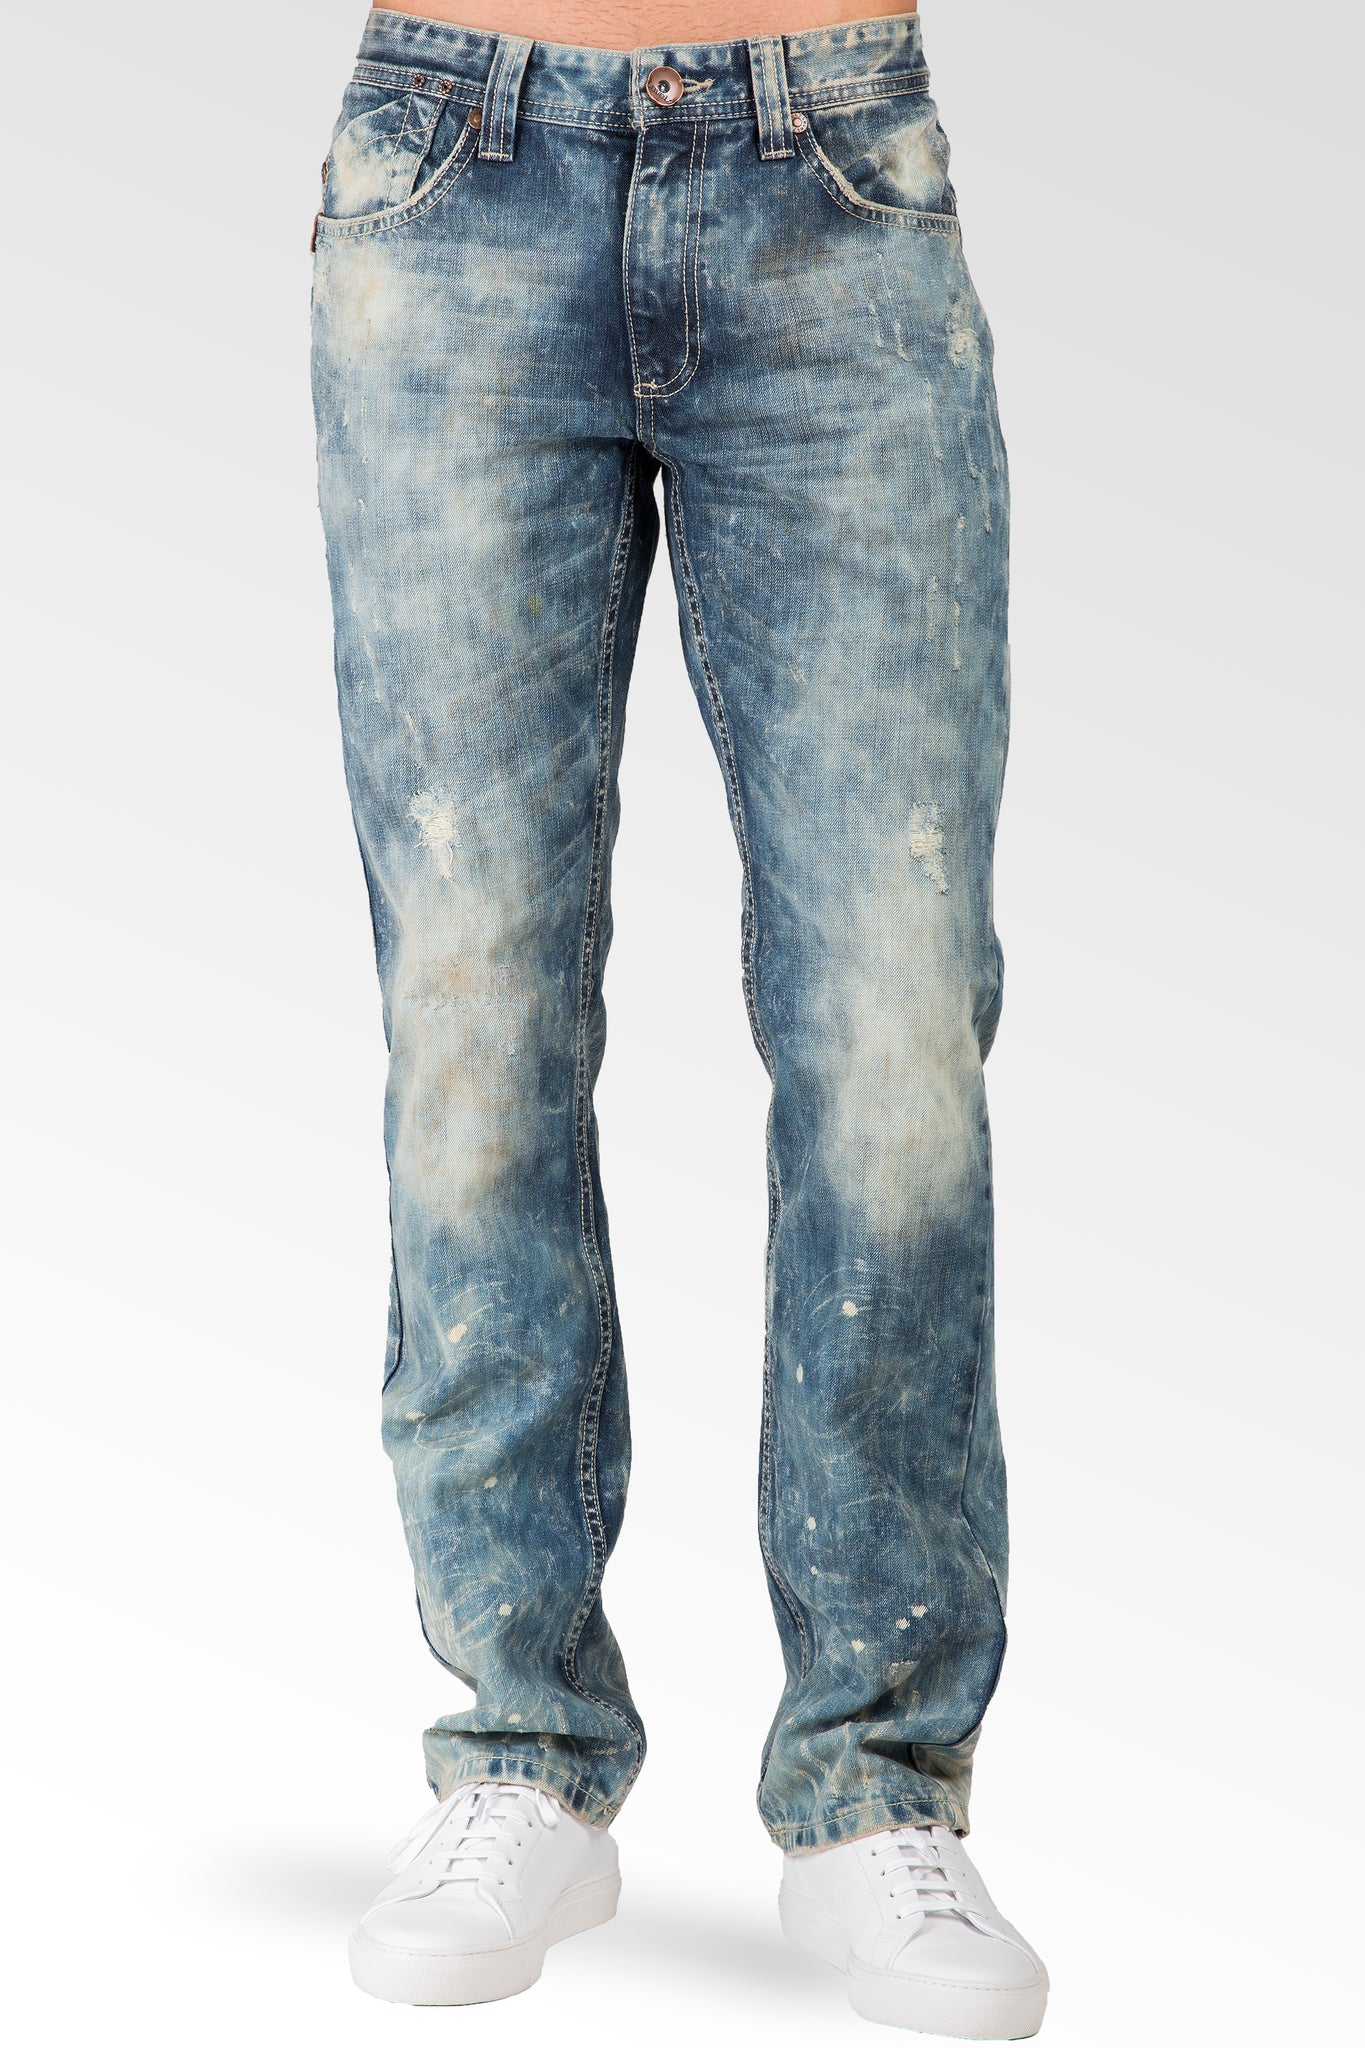 Slim Straight Premium Denim Light Vintage Distressed Signature 5 Pocket Jeans